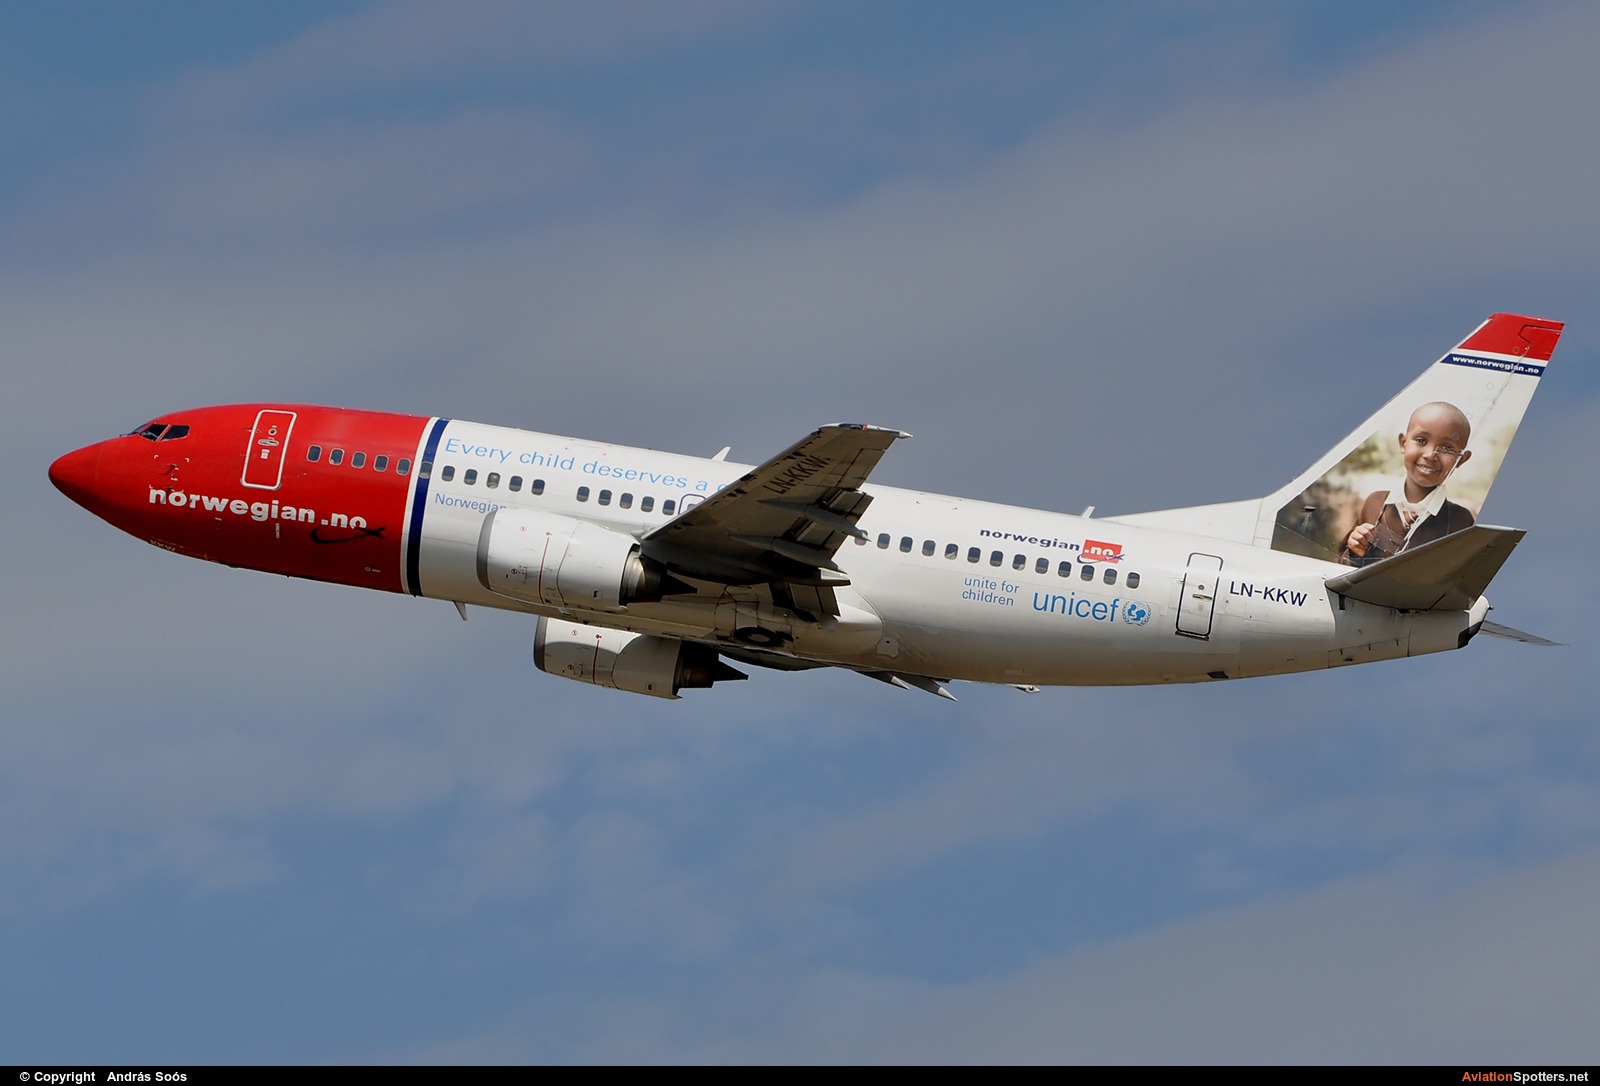 Norwegian Air Shuttle  -  737-300  (LN-KKW) By András Soós (sas1965)